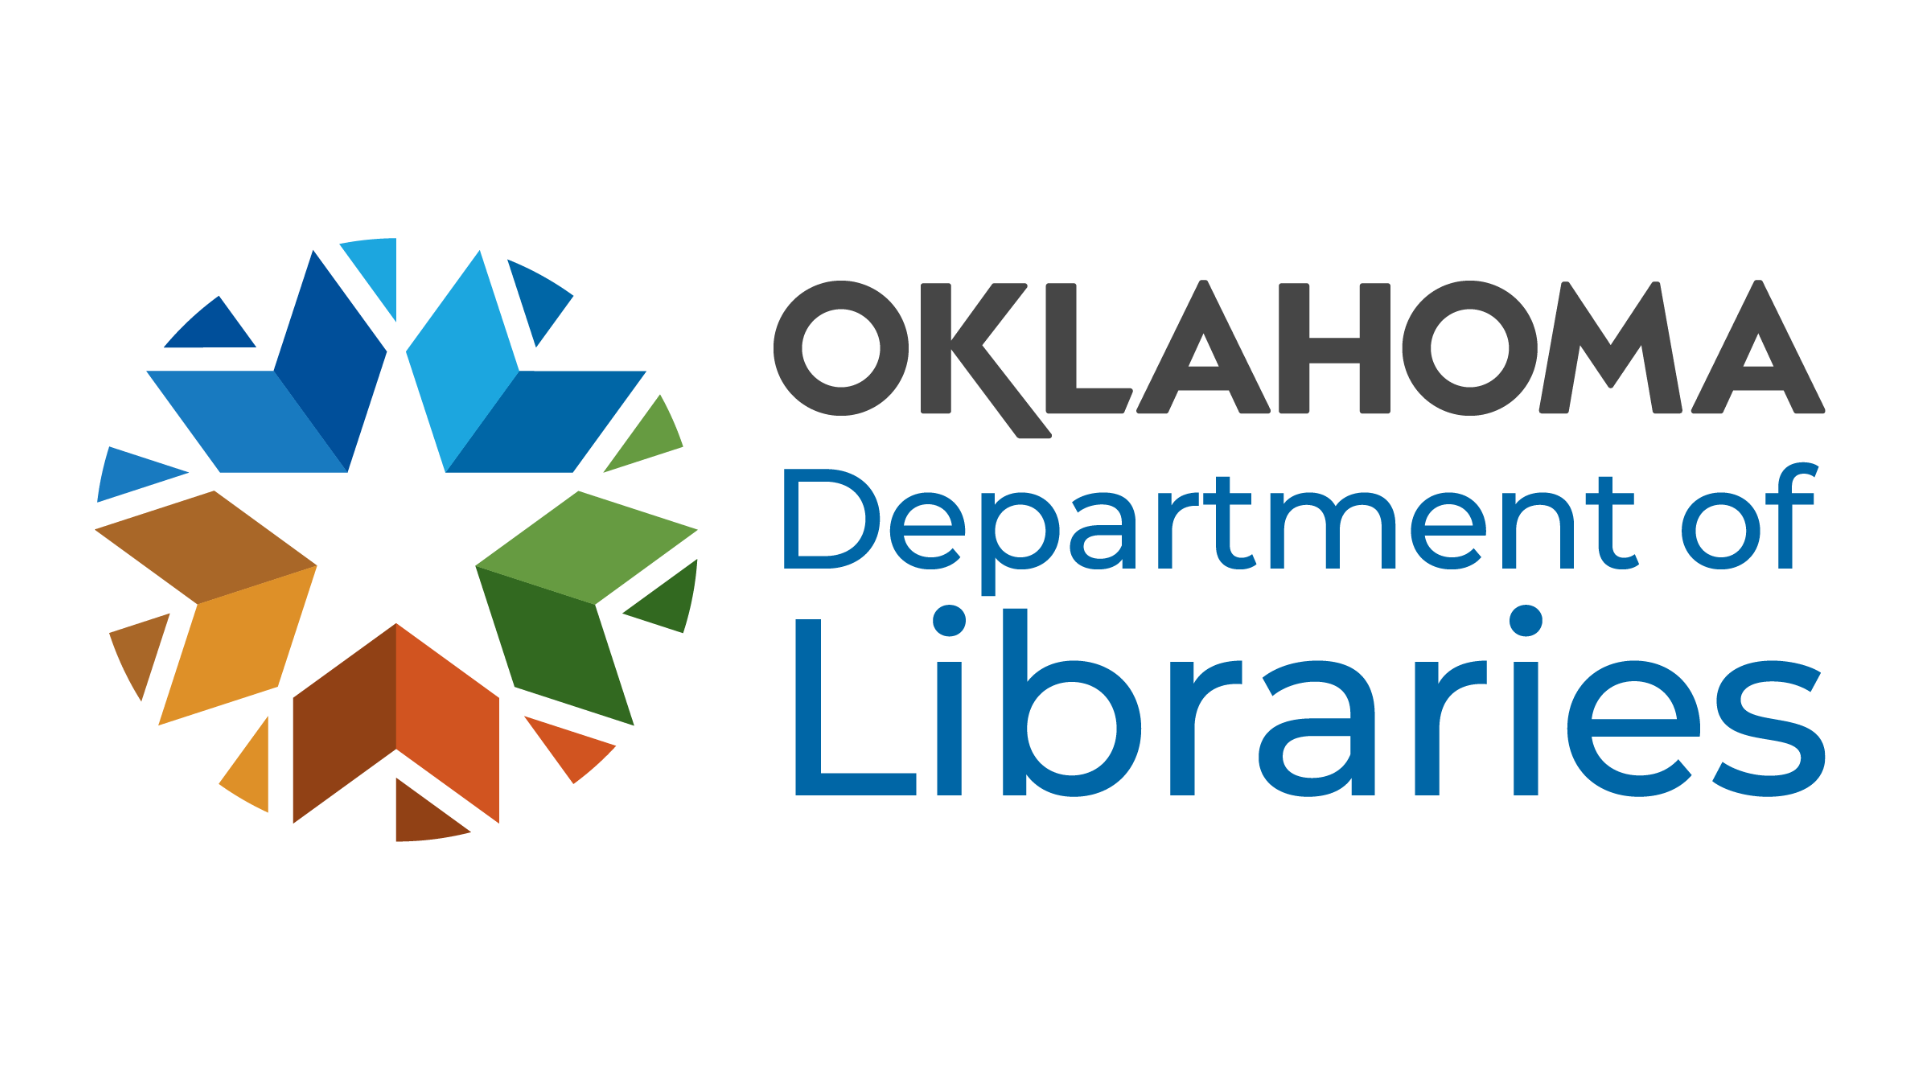 Oklahoma Department of Libraries logo.